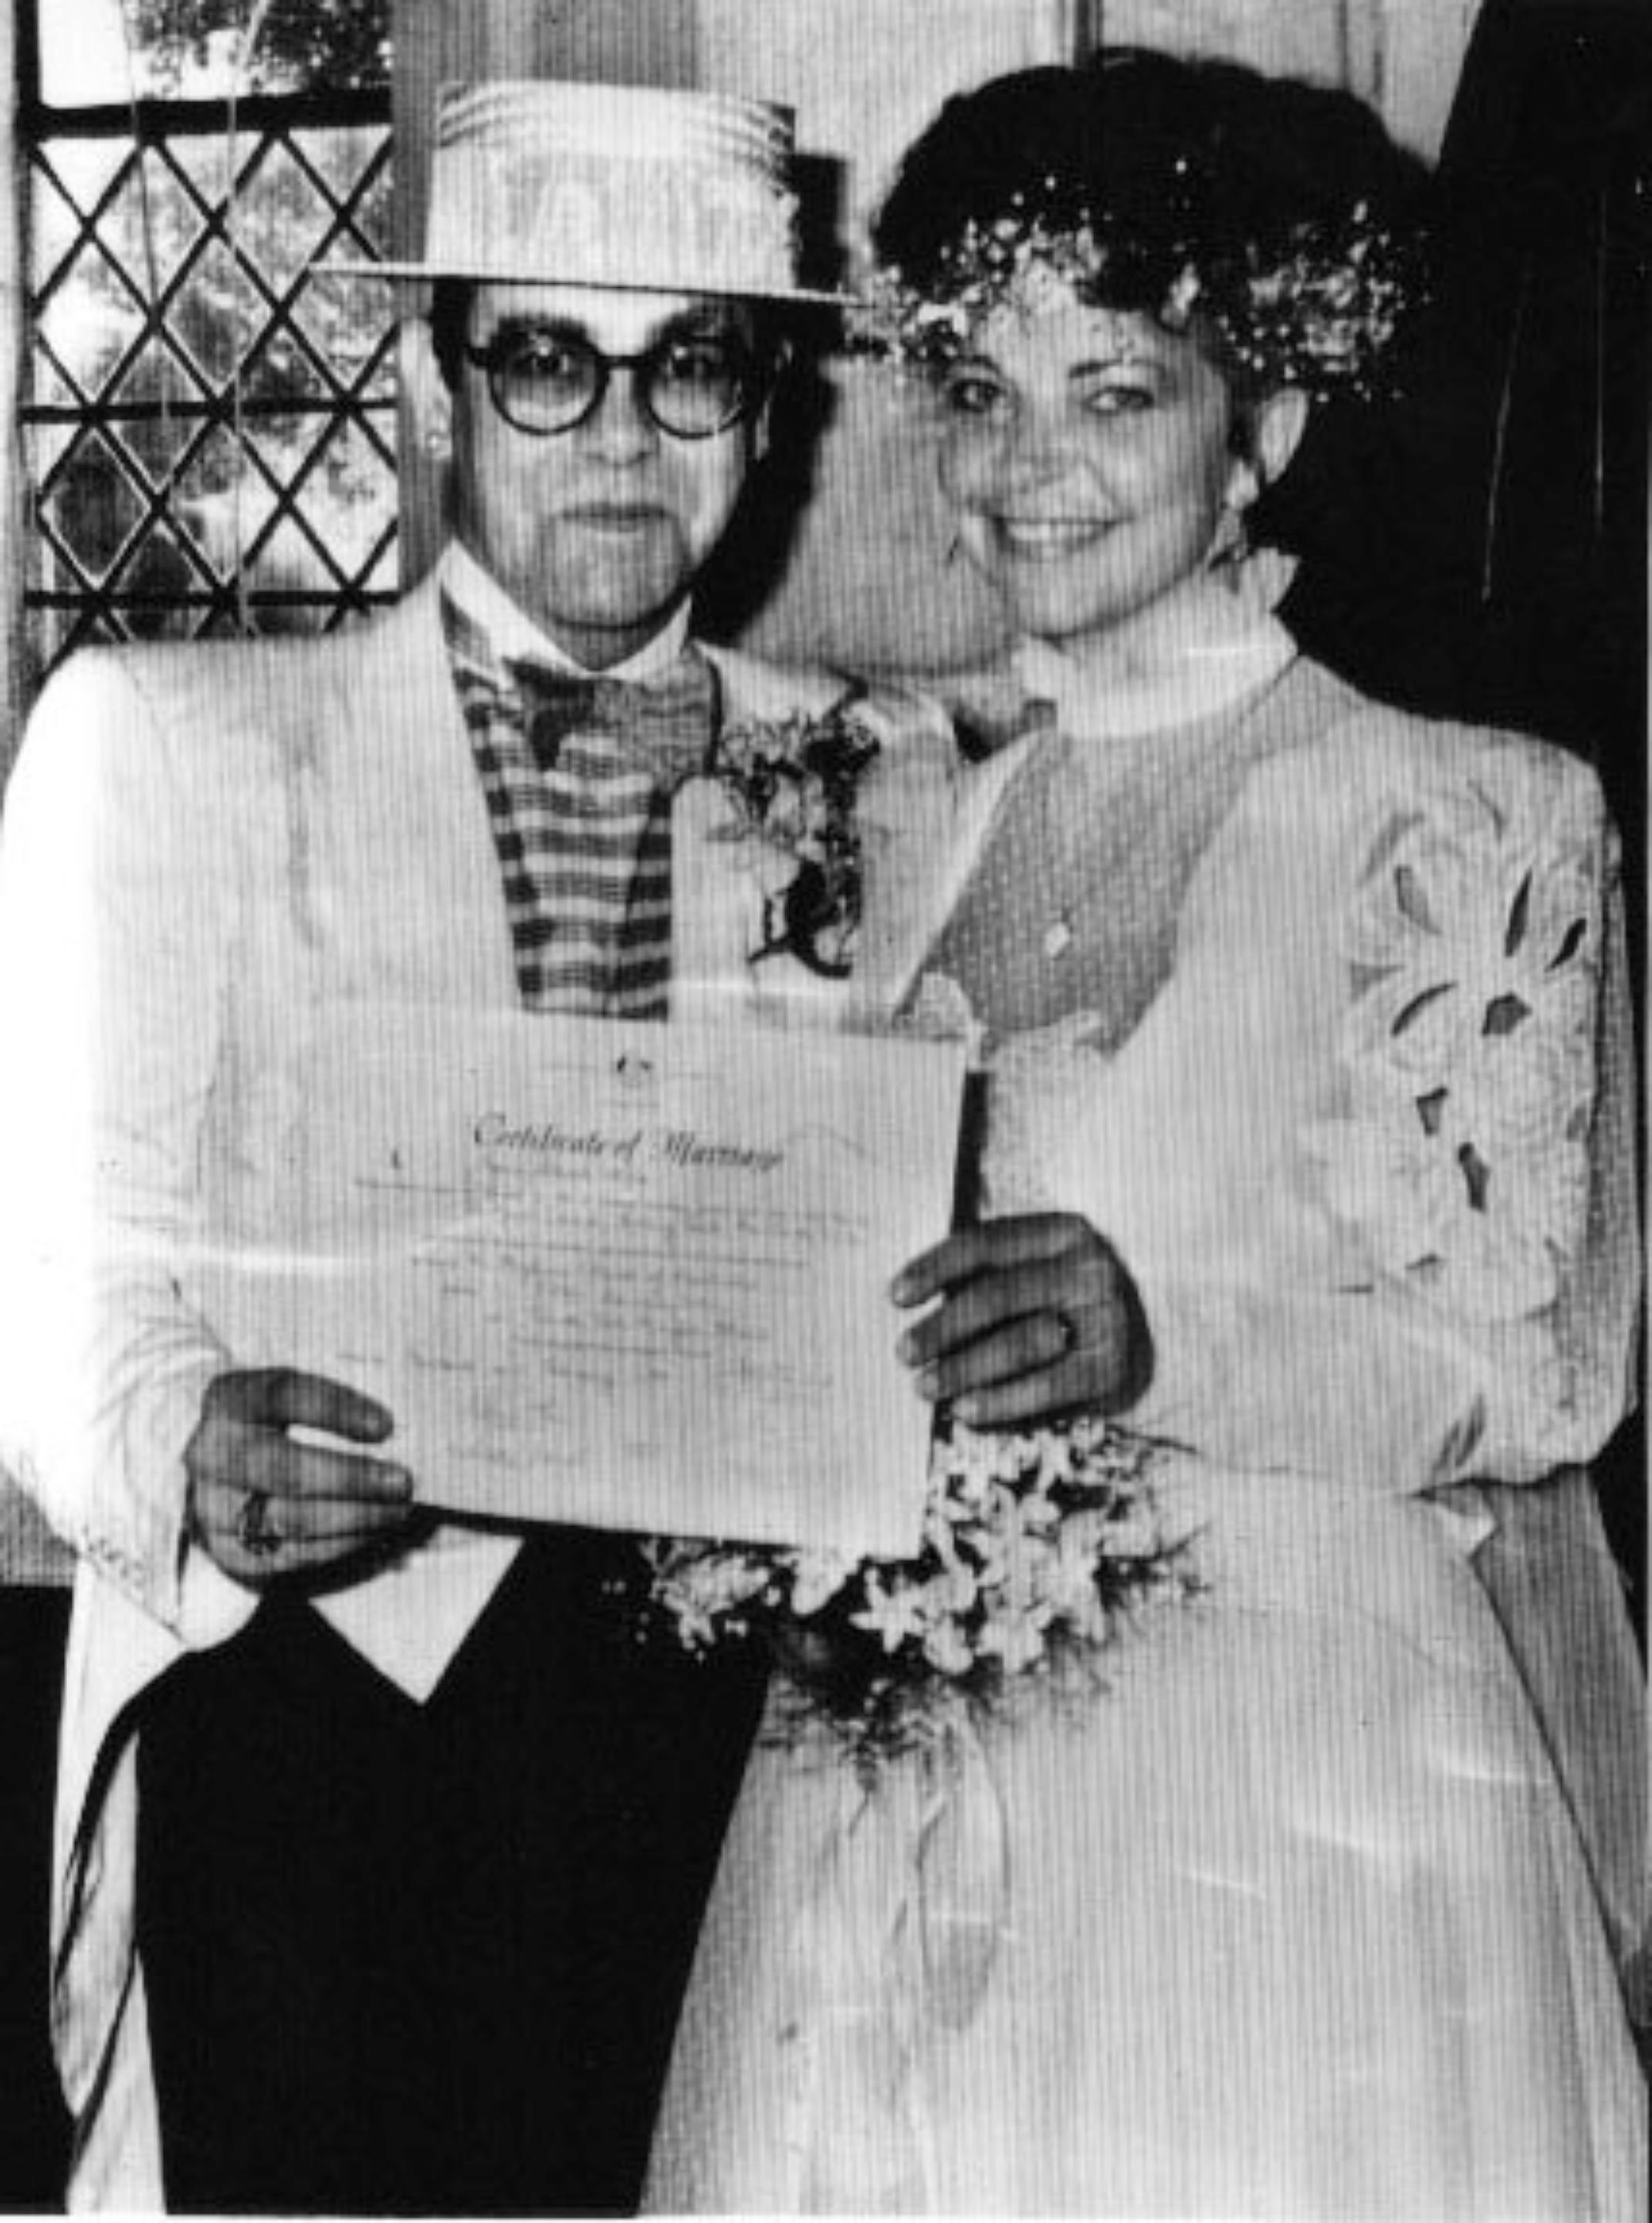 Figurative Photograph Unknown - Elton John's Certificate of Marriage 1984 - Photo vintage - années 1980